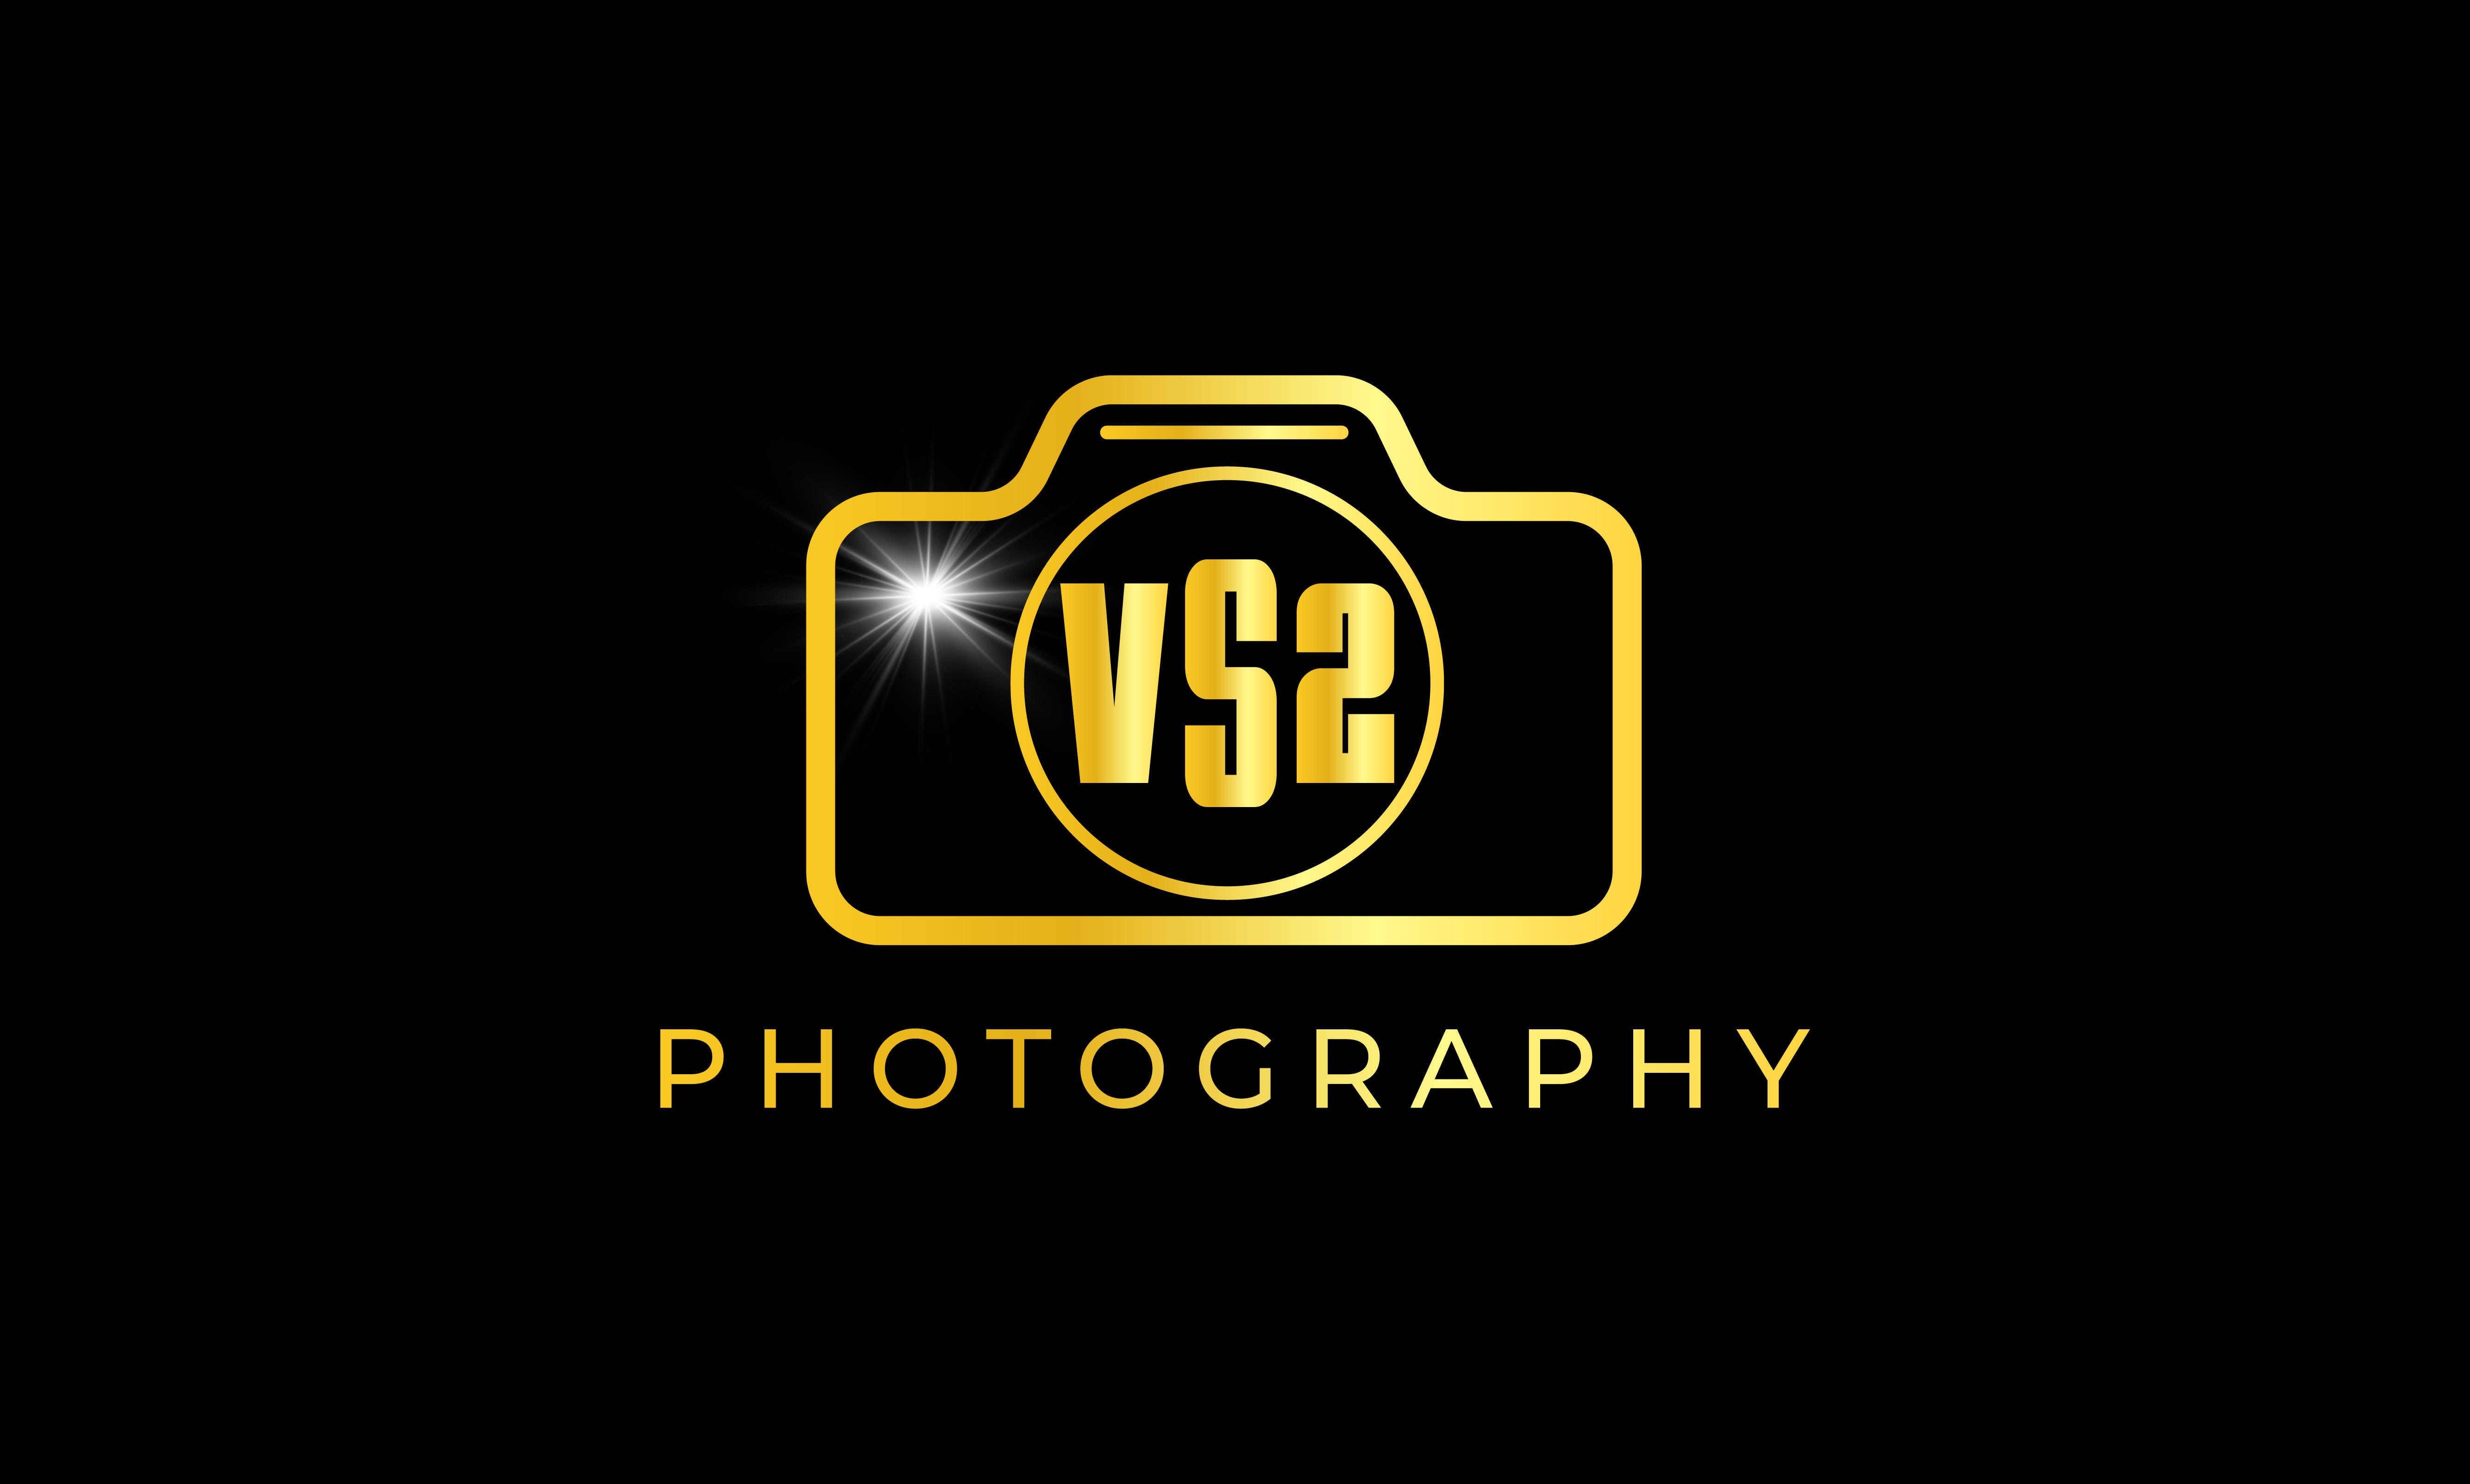 VS2 Photography